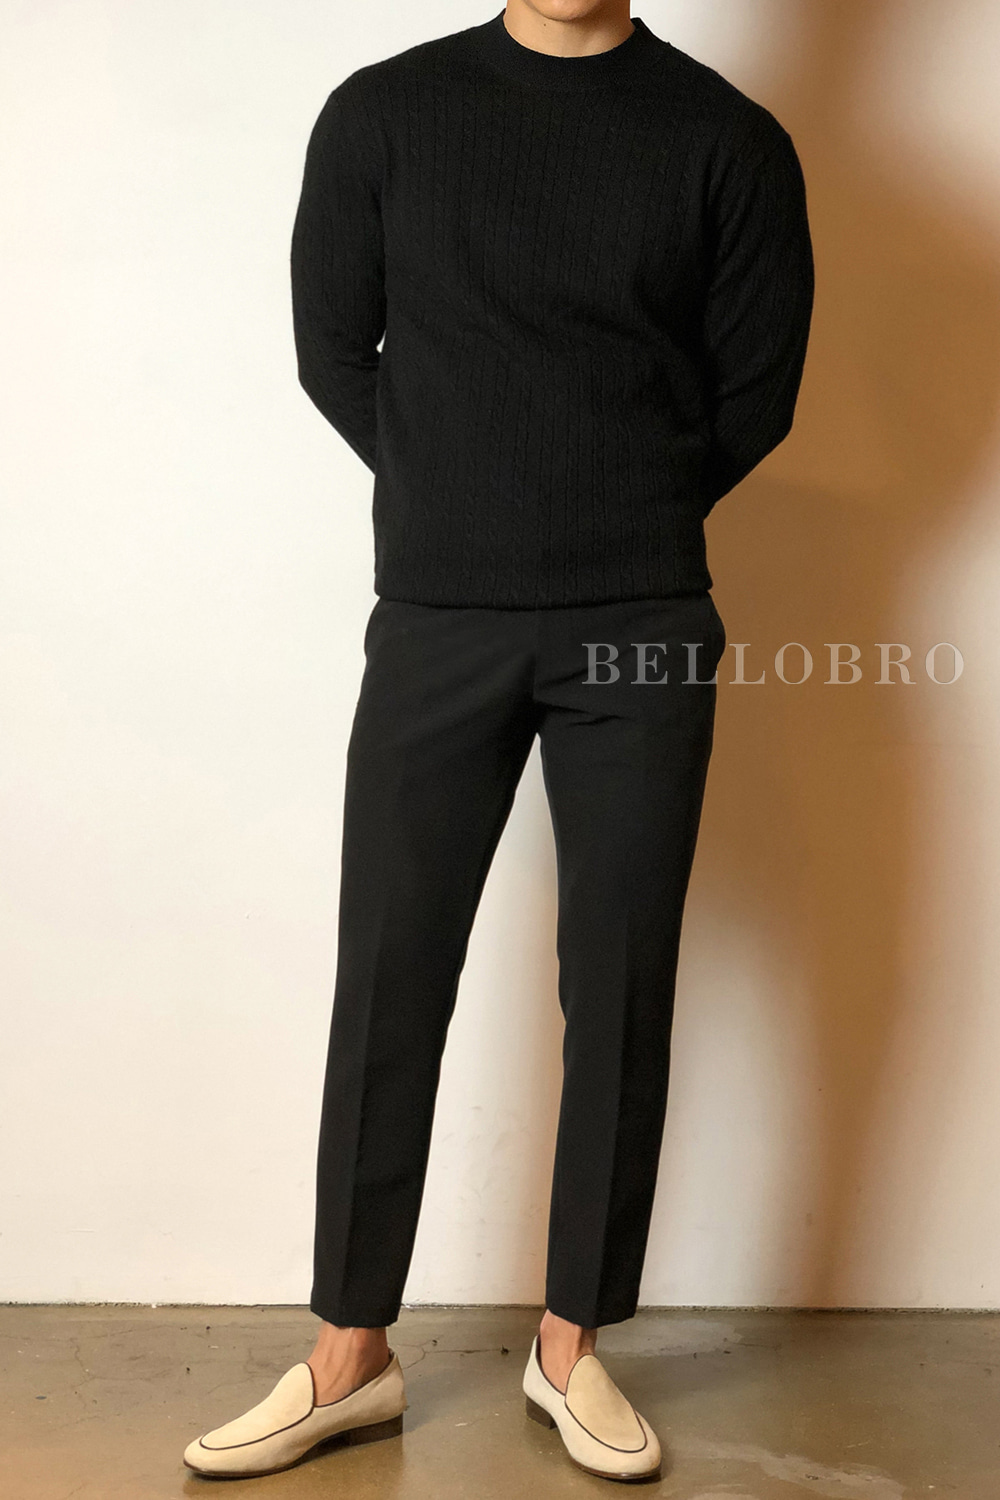 Bellobro basic span slacks